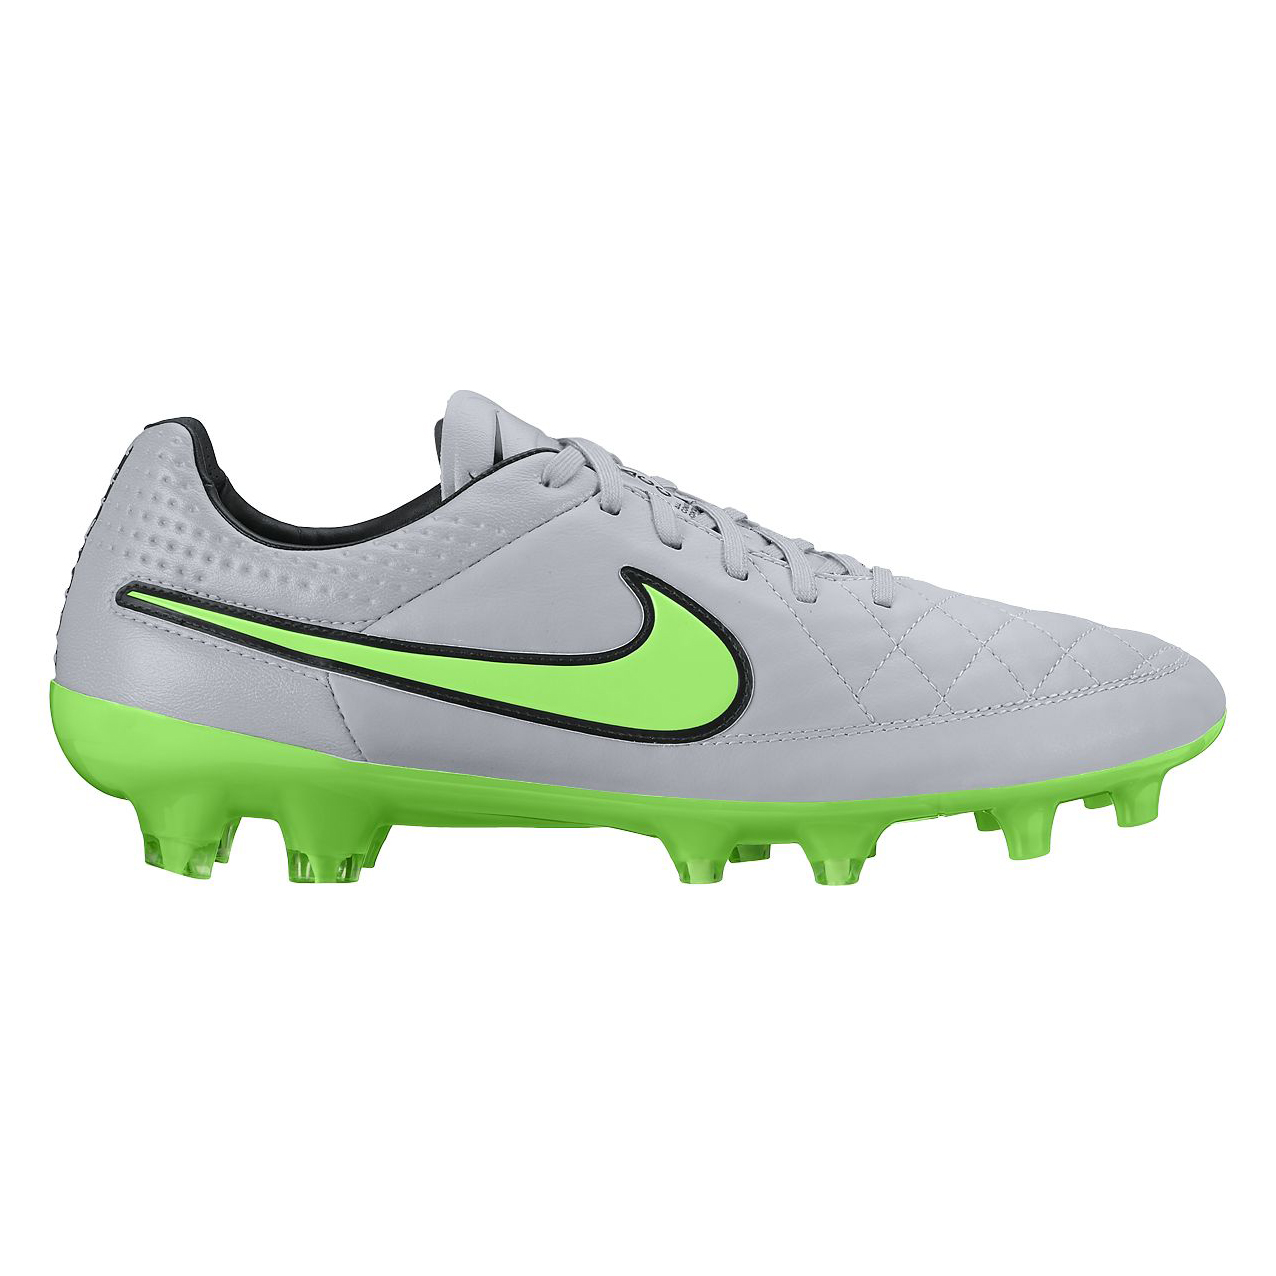 Las de fútbol Nike Tiempo V colore gris verde - Nike - SportIT.com